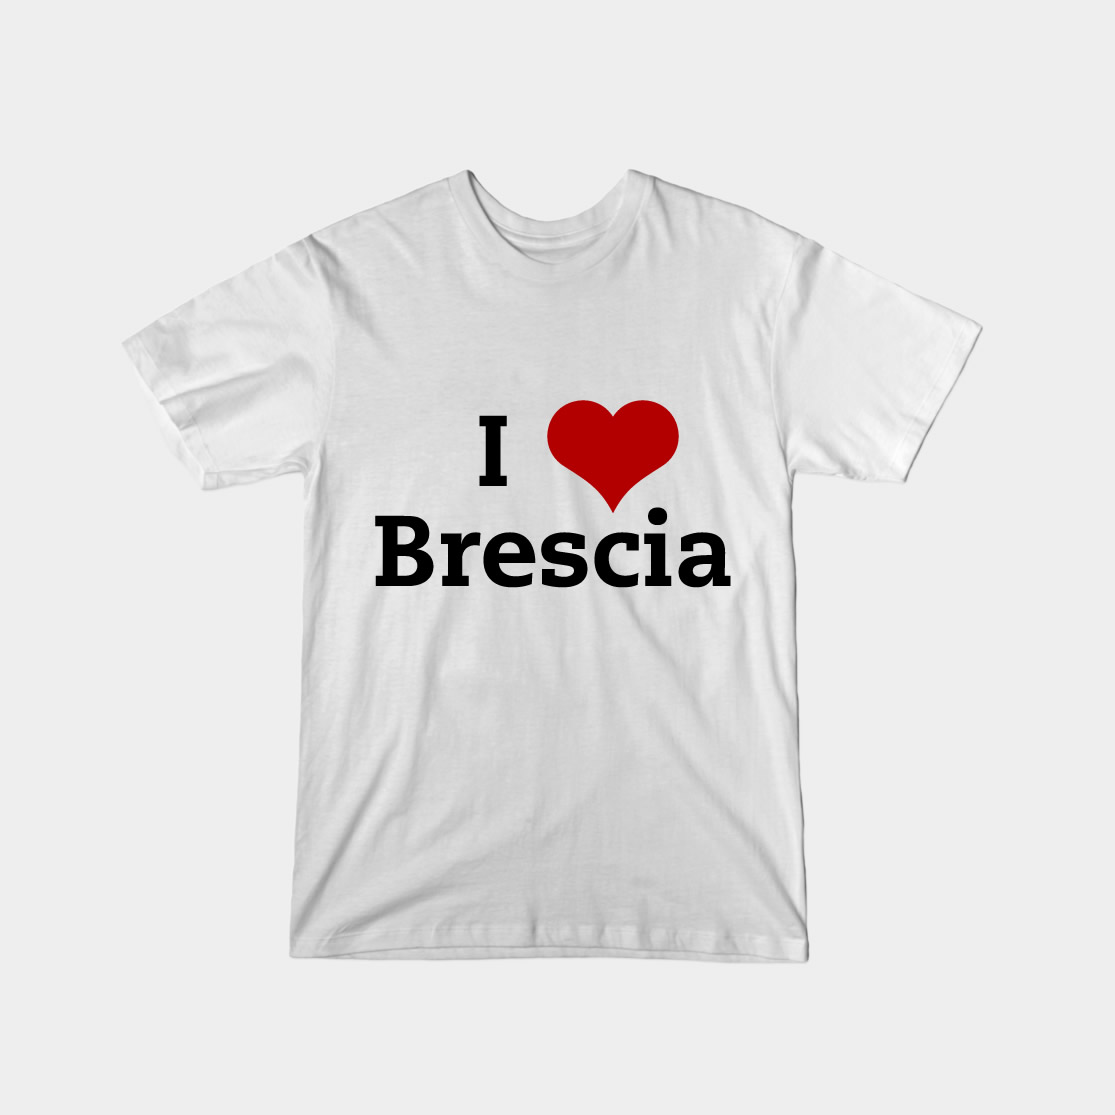 I-love-Brescia-bianca